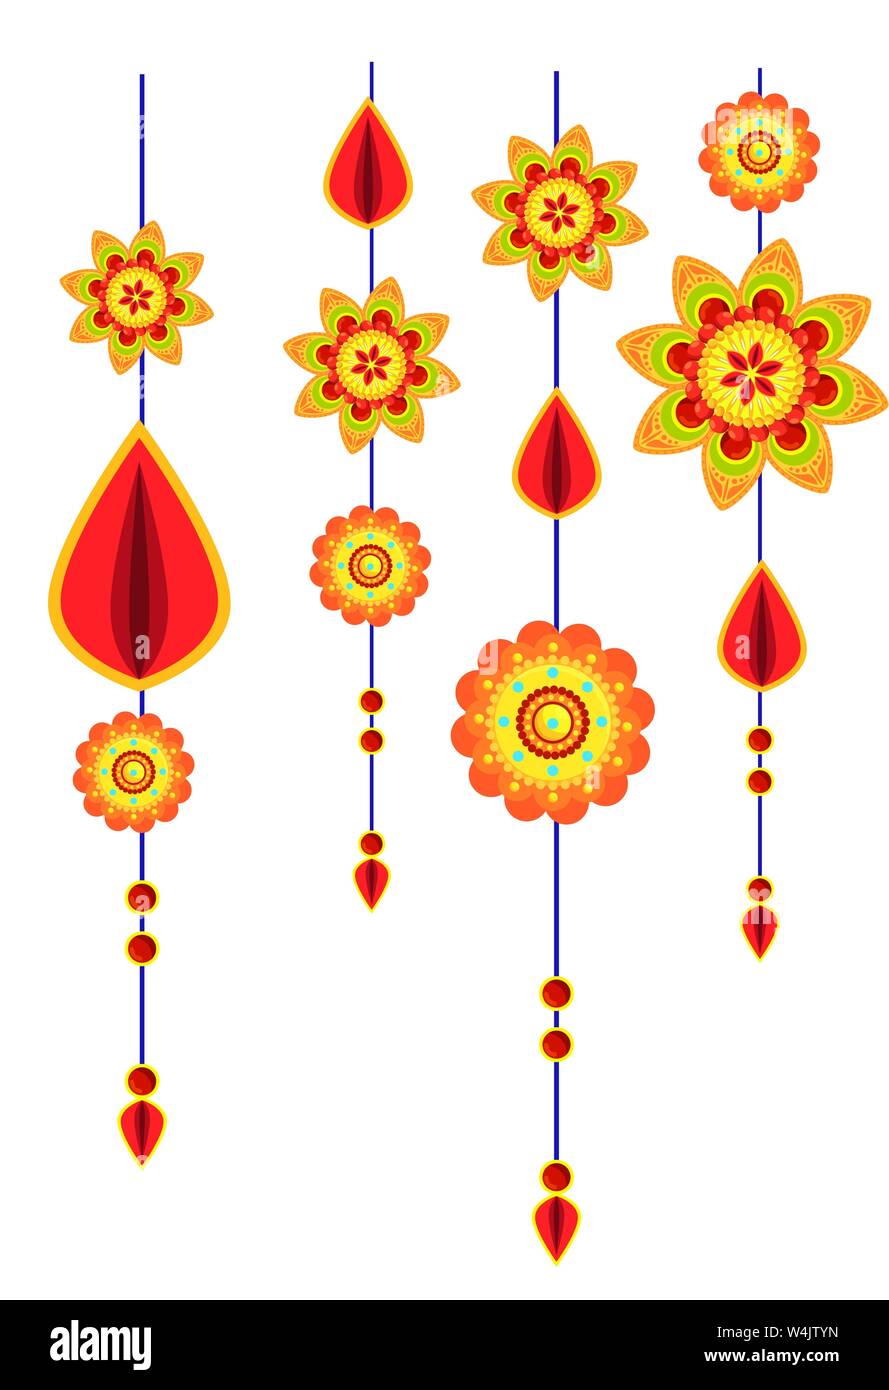 Mandalas colgantes decorativos de estilo boho étnico Imagen Vector de stock  - Alamy